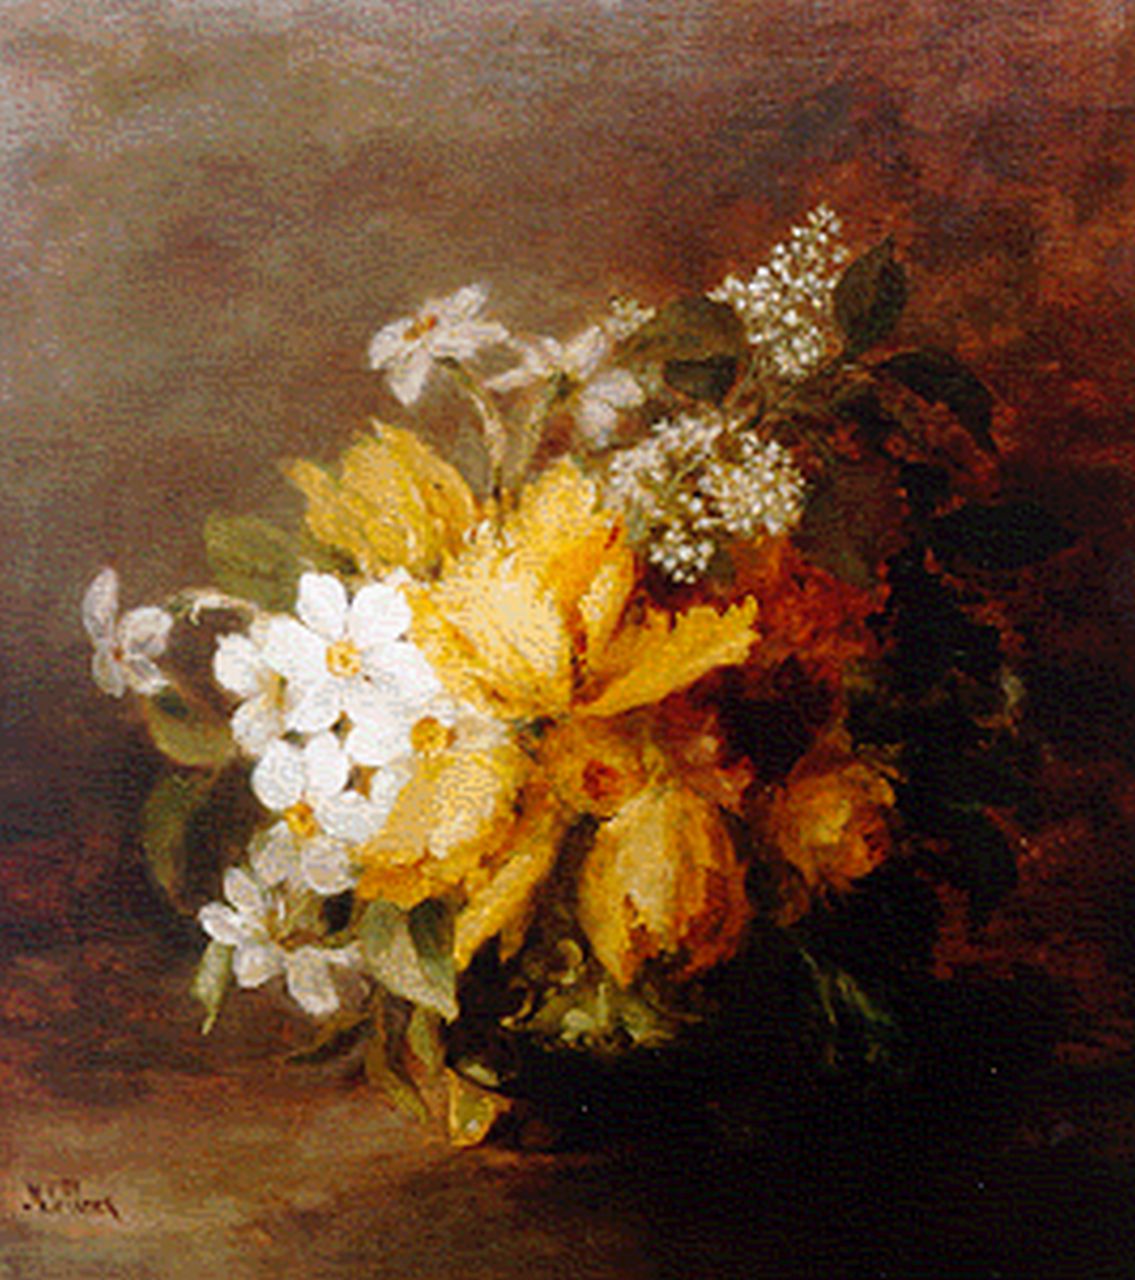 Clerq M.C. de | Marguérite Carolina de Clerq, A still life with flowers, Öl auf Leinwand 58,5 x 52,5 cm, signed l.l.